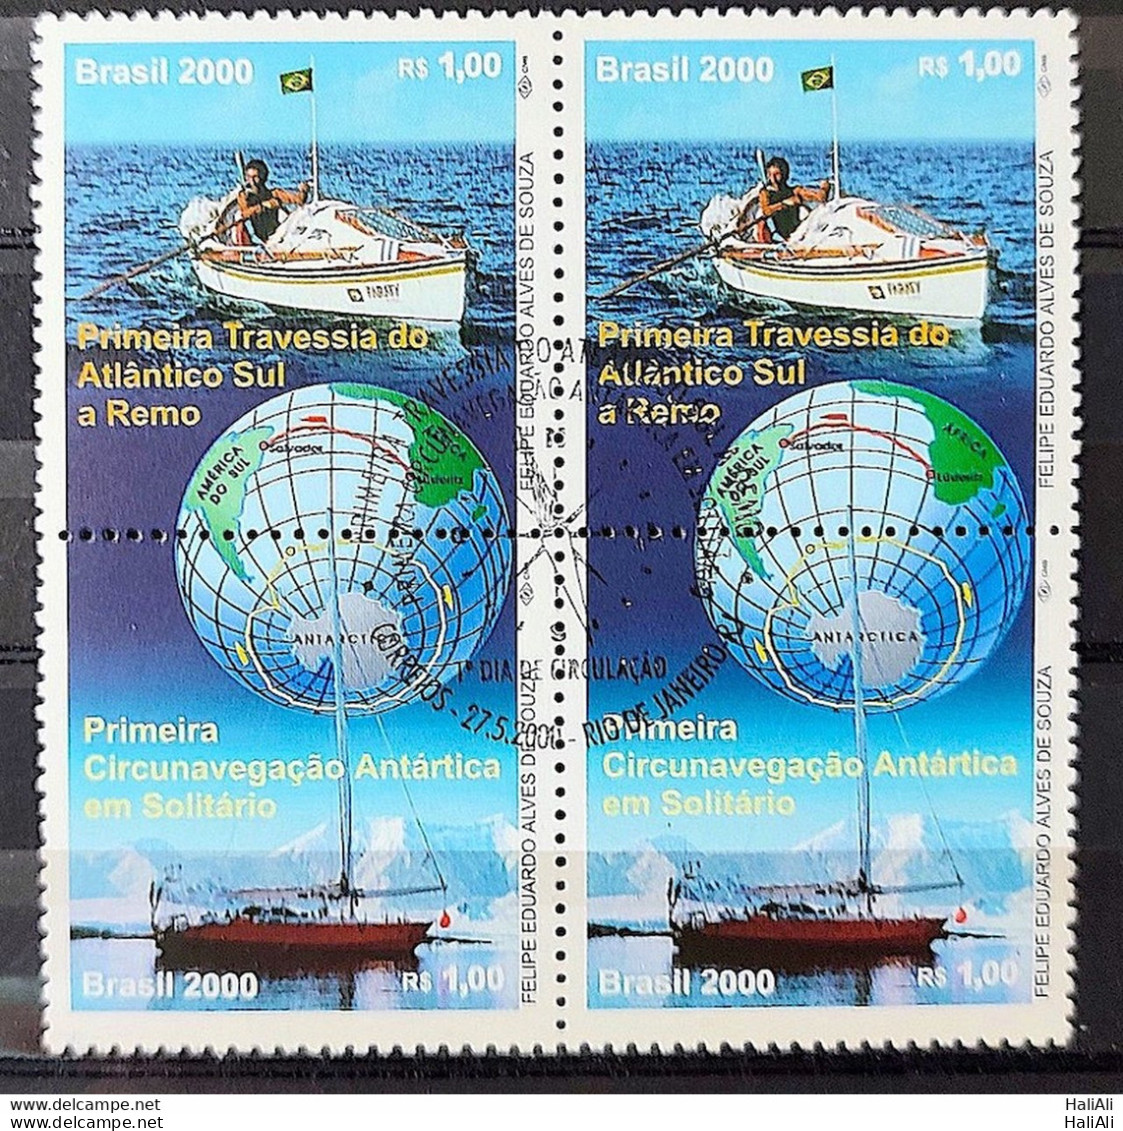 C 2282 Brazil Stamp Atlantic South Amyr Klink Parati Ship Flag Antartica Map 2000 Block Of 4 CBC RJ - Ongebruikt